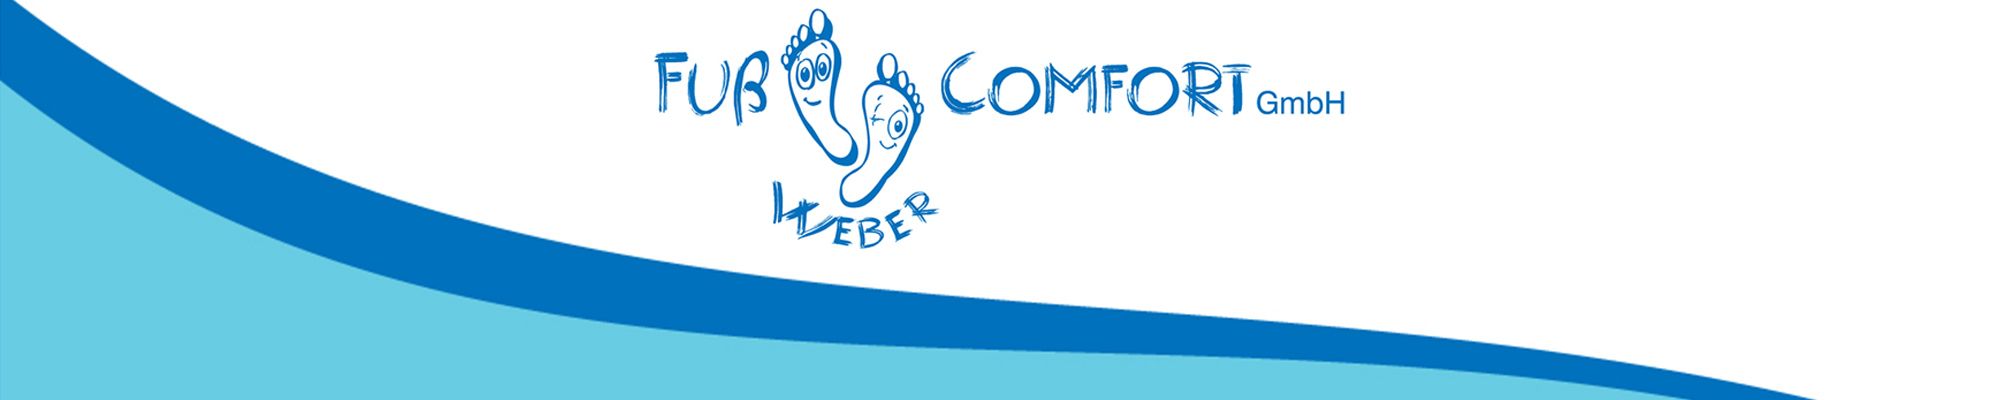 Fußcomfort Weber GmbH